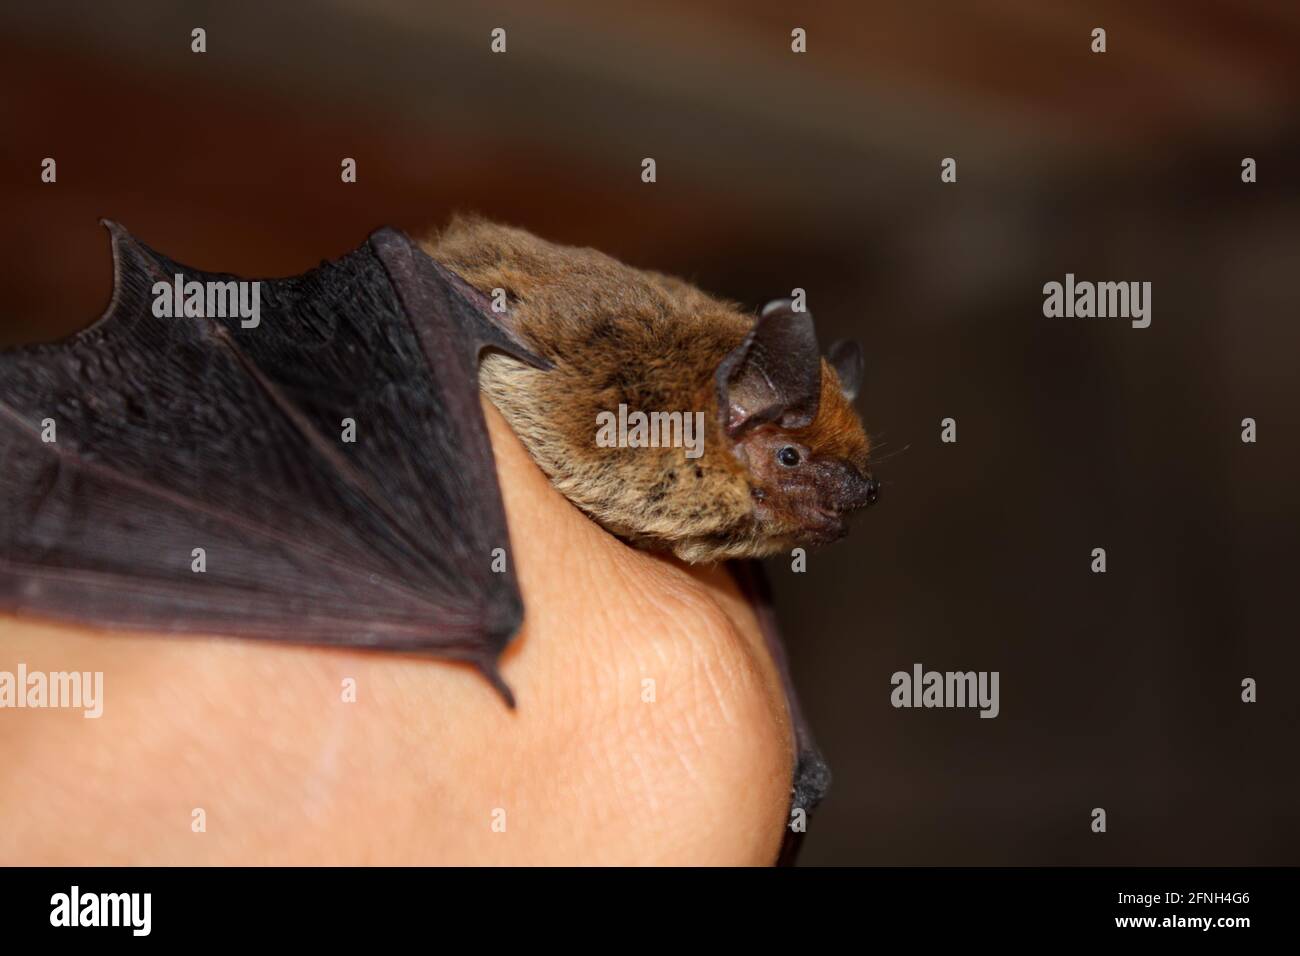 Small brown bat mammal on a human hand Stock Photo